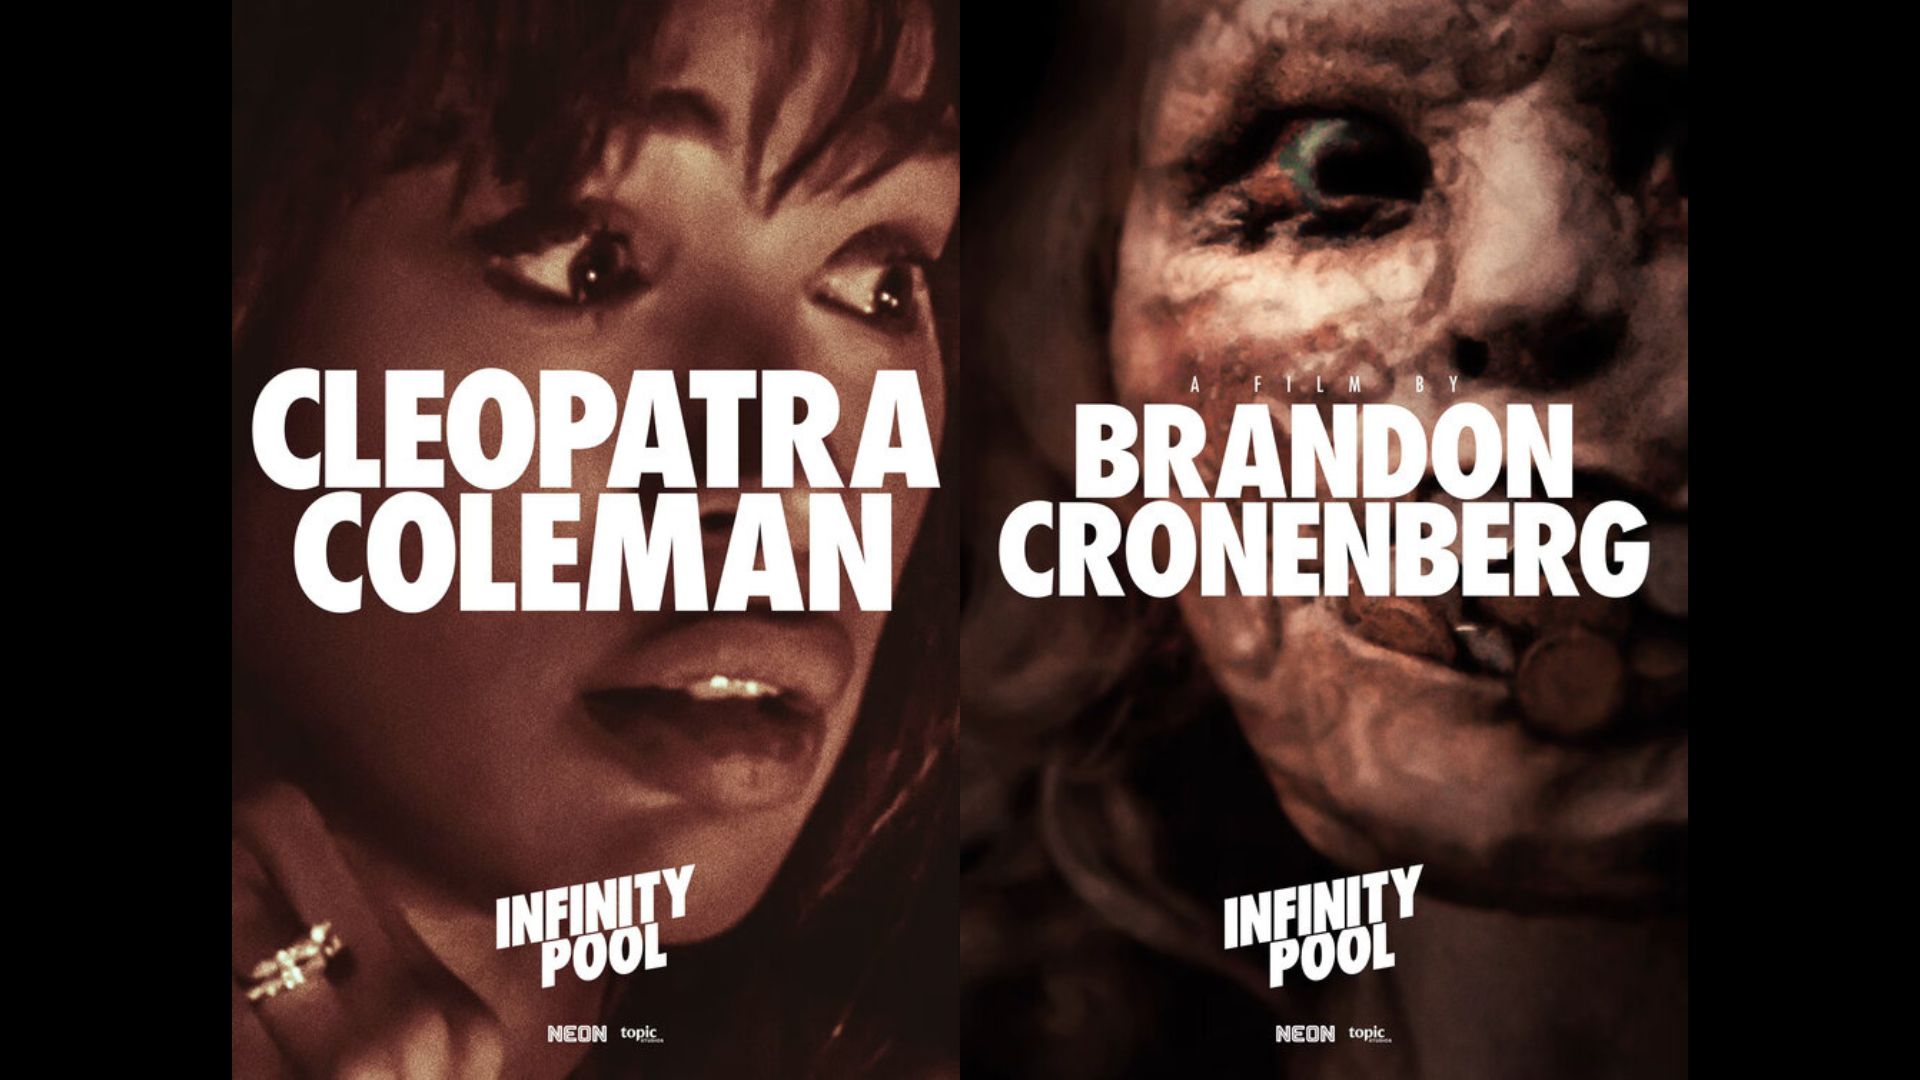 infinity pool posters cleopatra coleman brandon cronenberg